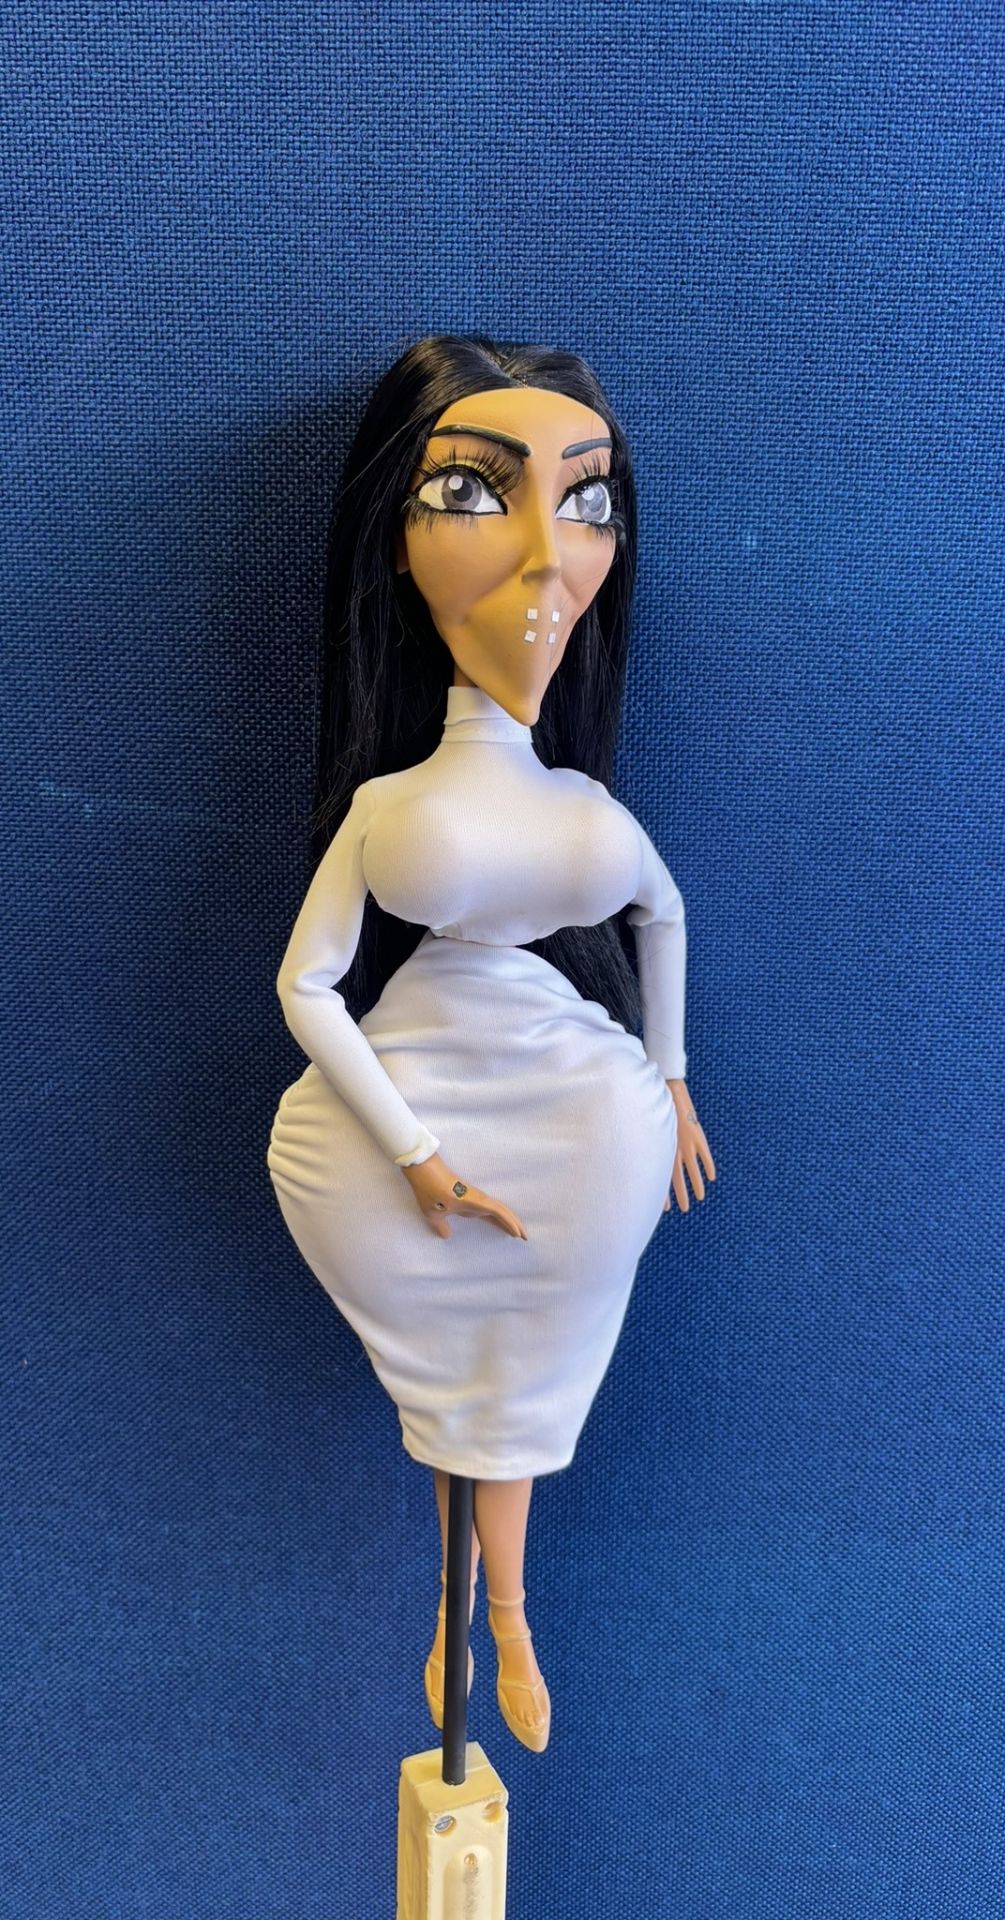 Newzoid puppet - Kim Kardashian - Image 2 of 2